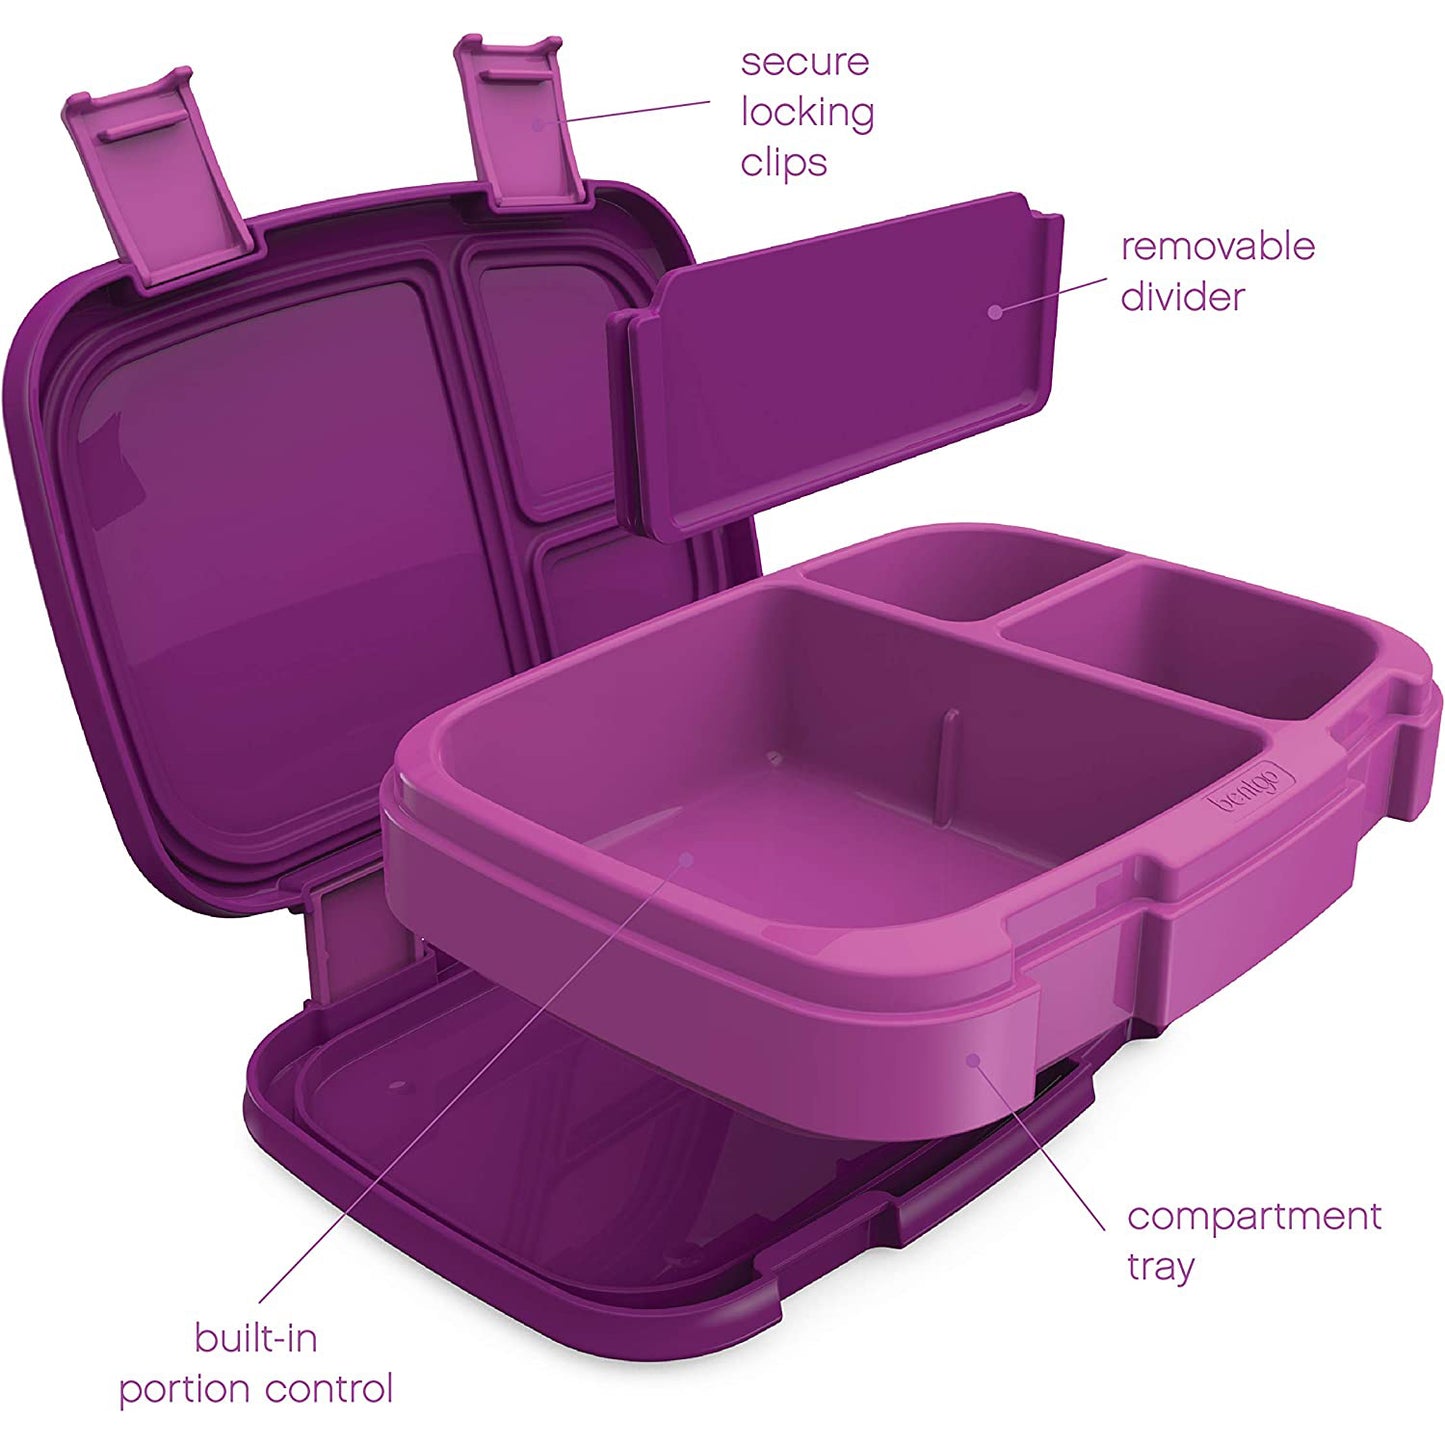 Bentgo Fresh Lunchbox Purple